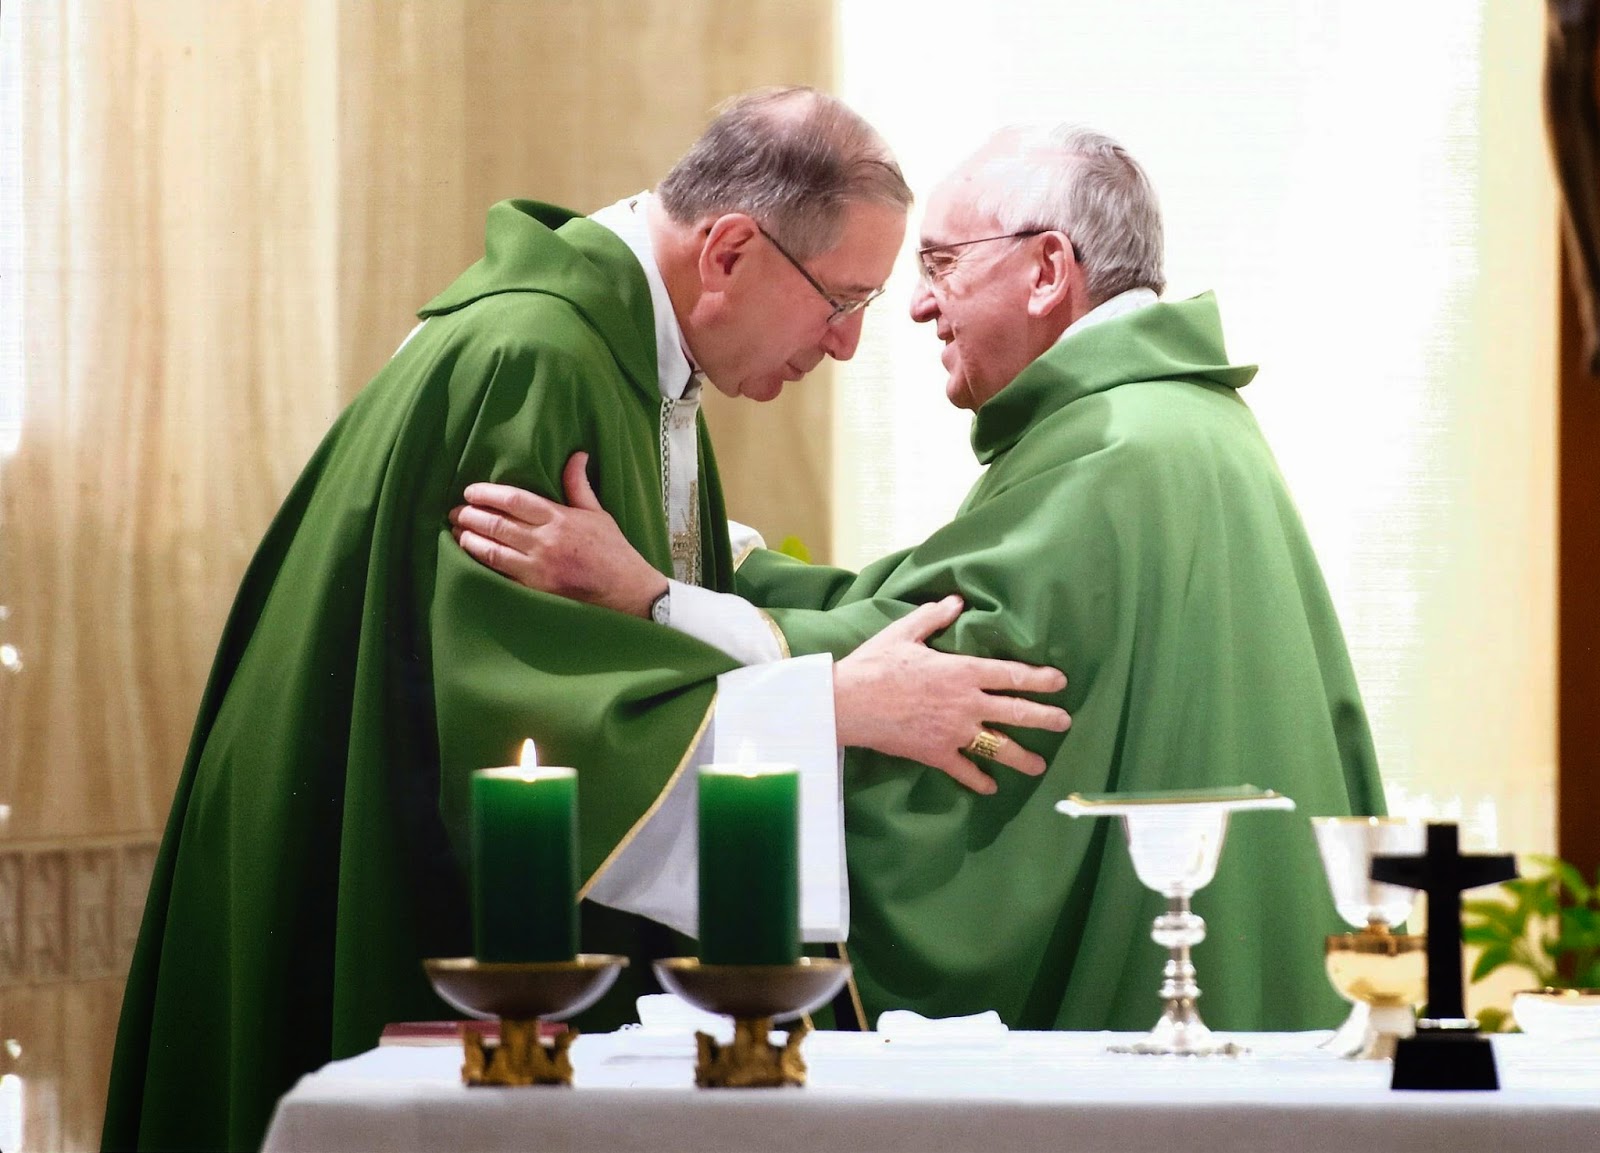 Cardinal Mahony concelebrates Mass with Pope Francis at Domus Sanctae Martae on January 16, 2014